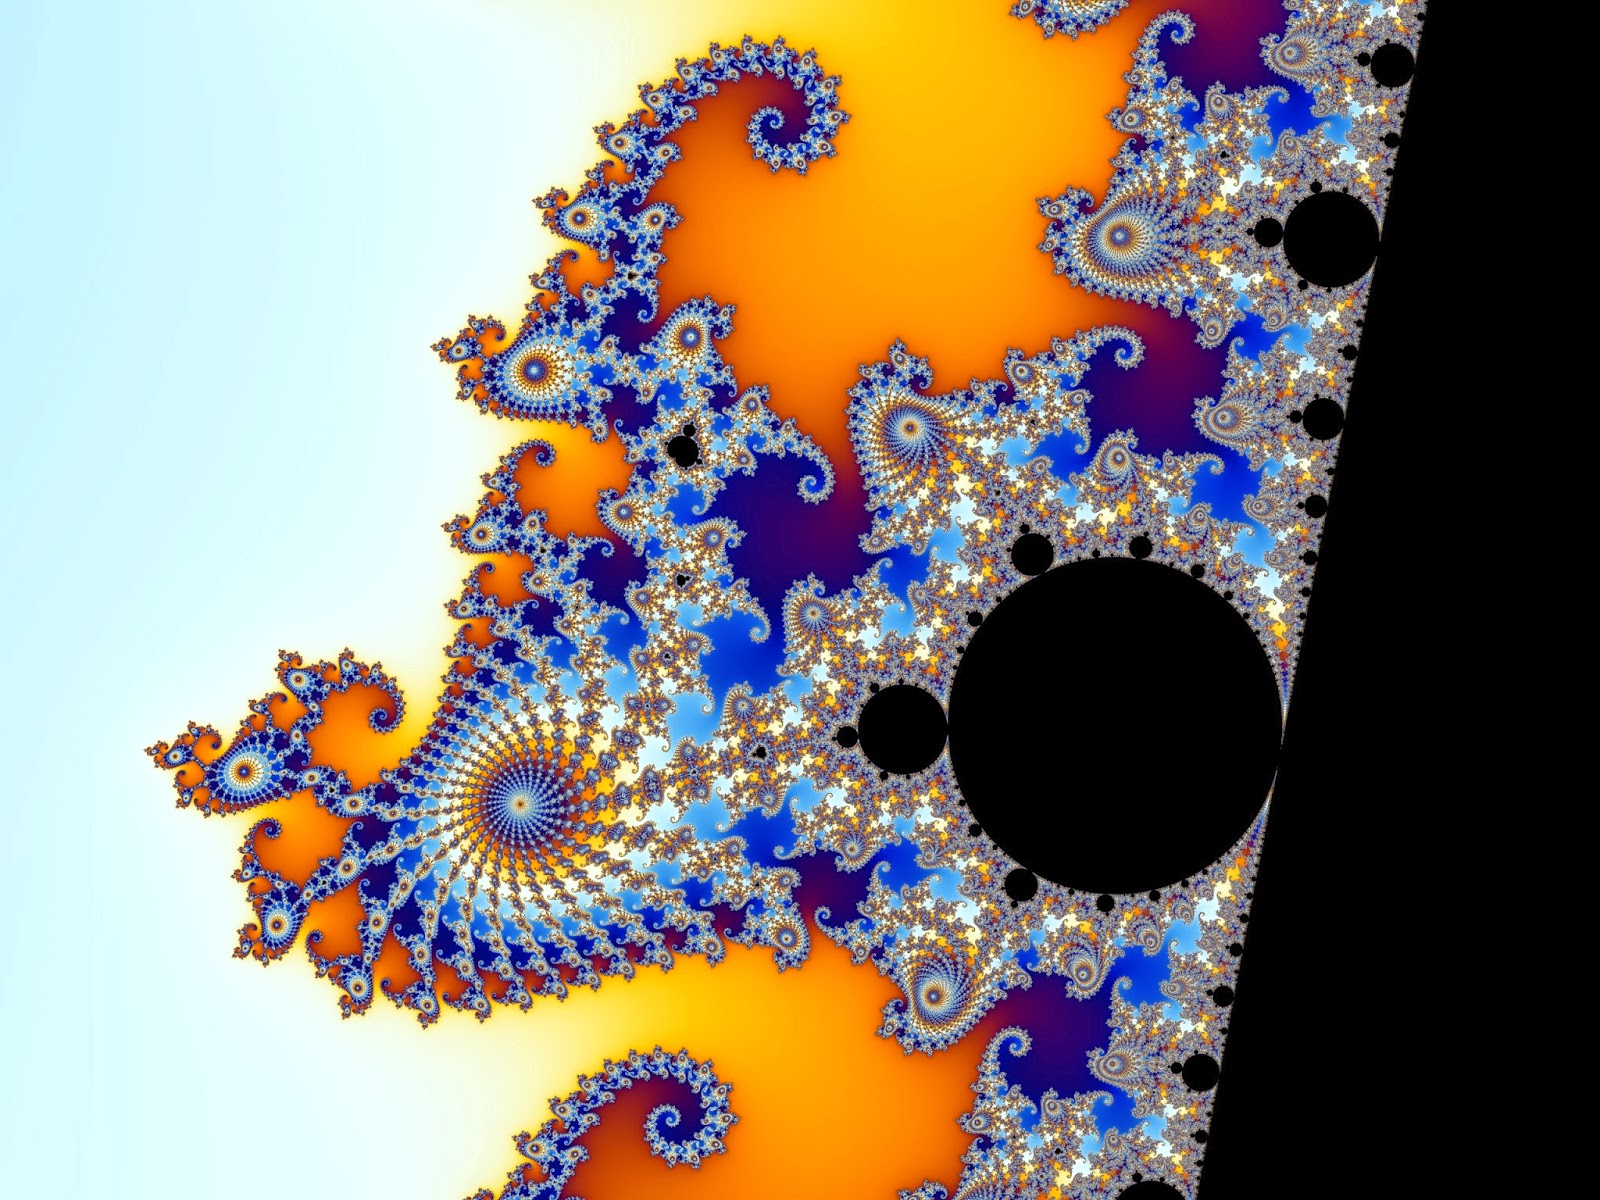 Los fractales de Mandelbrot